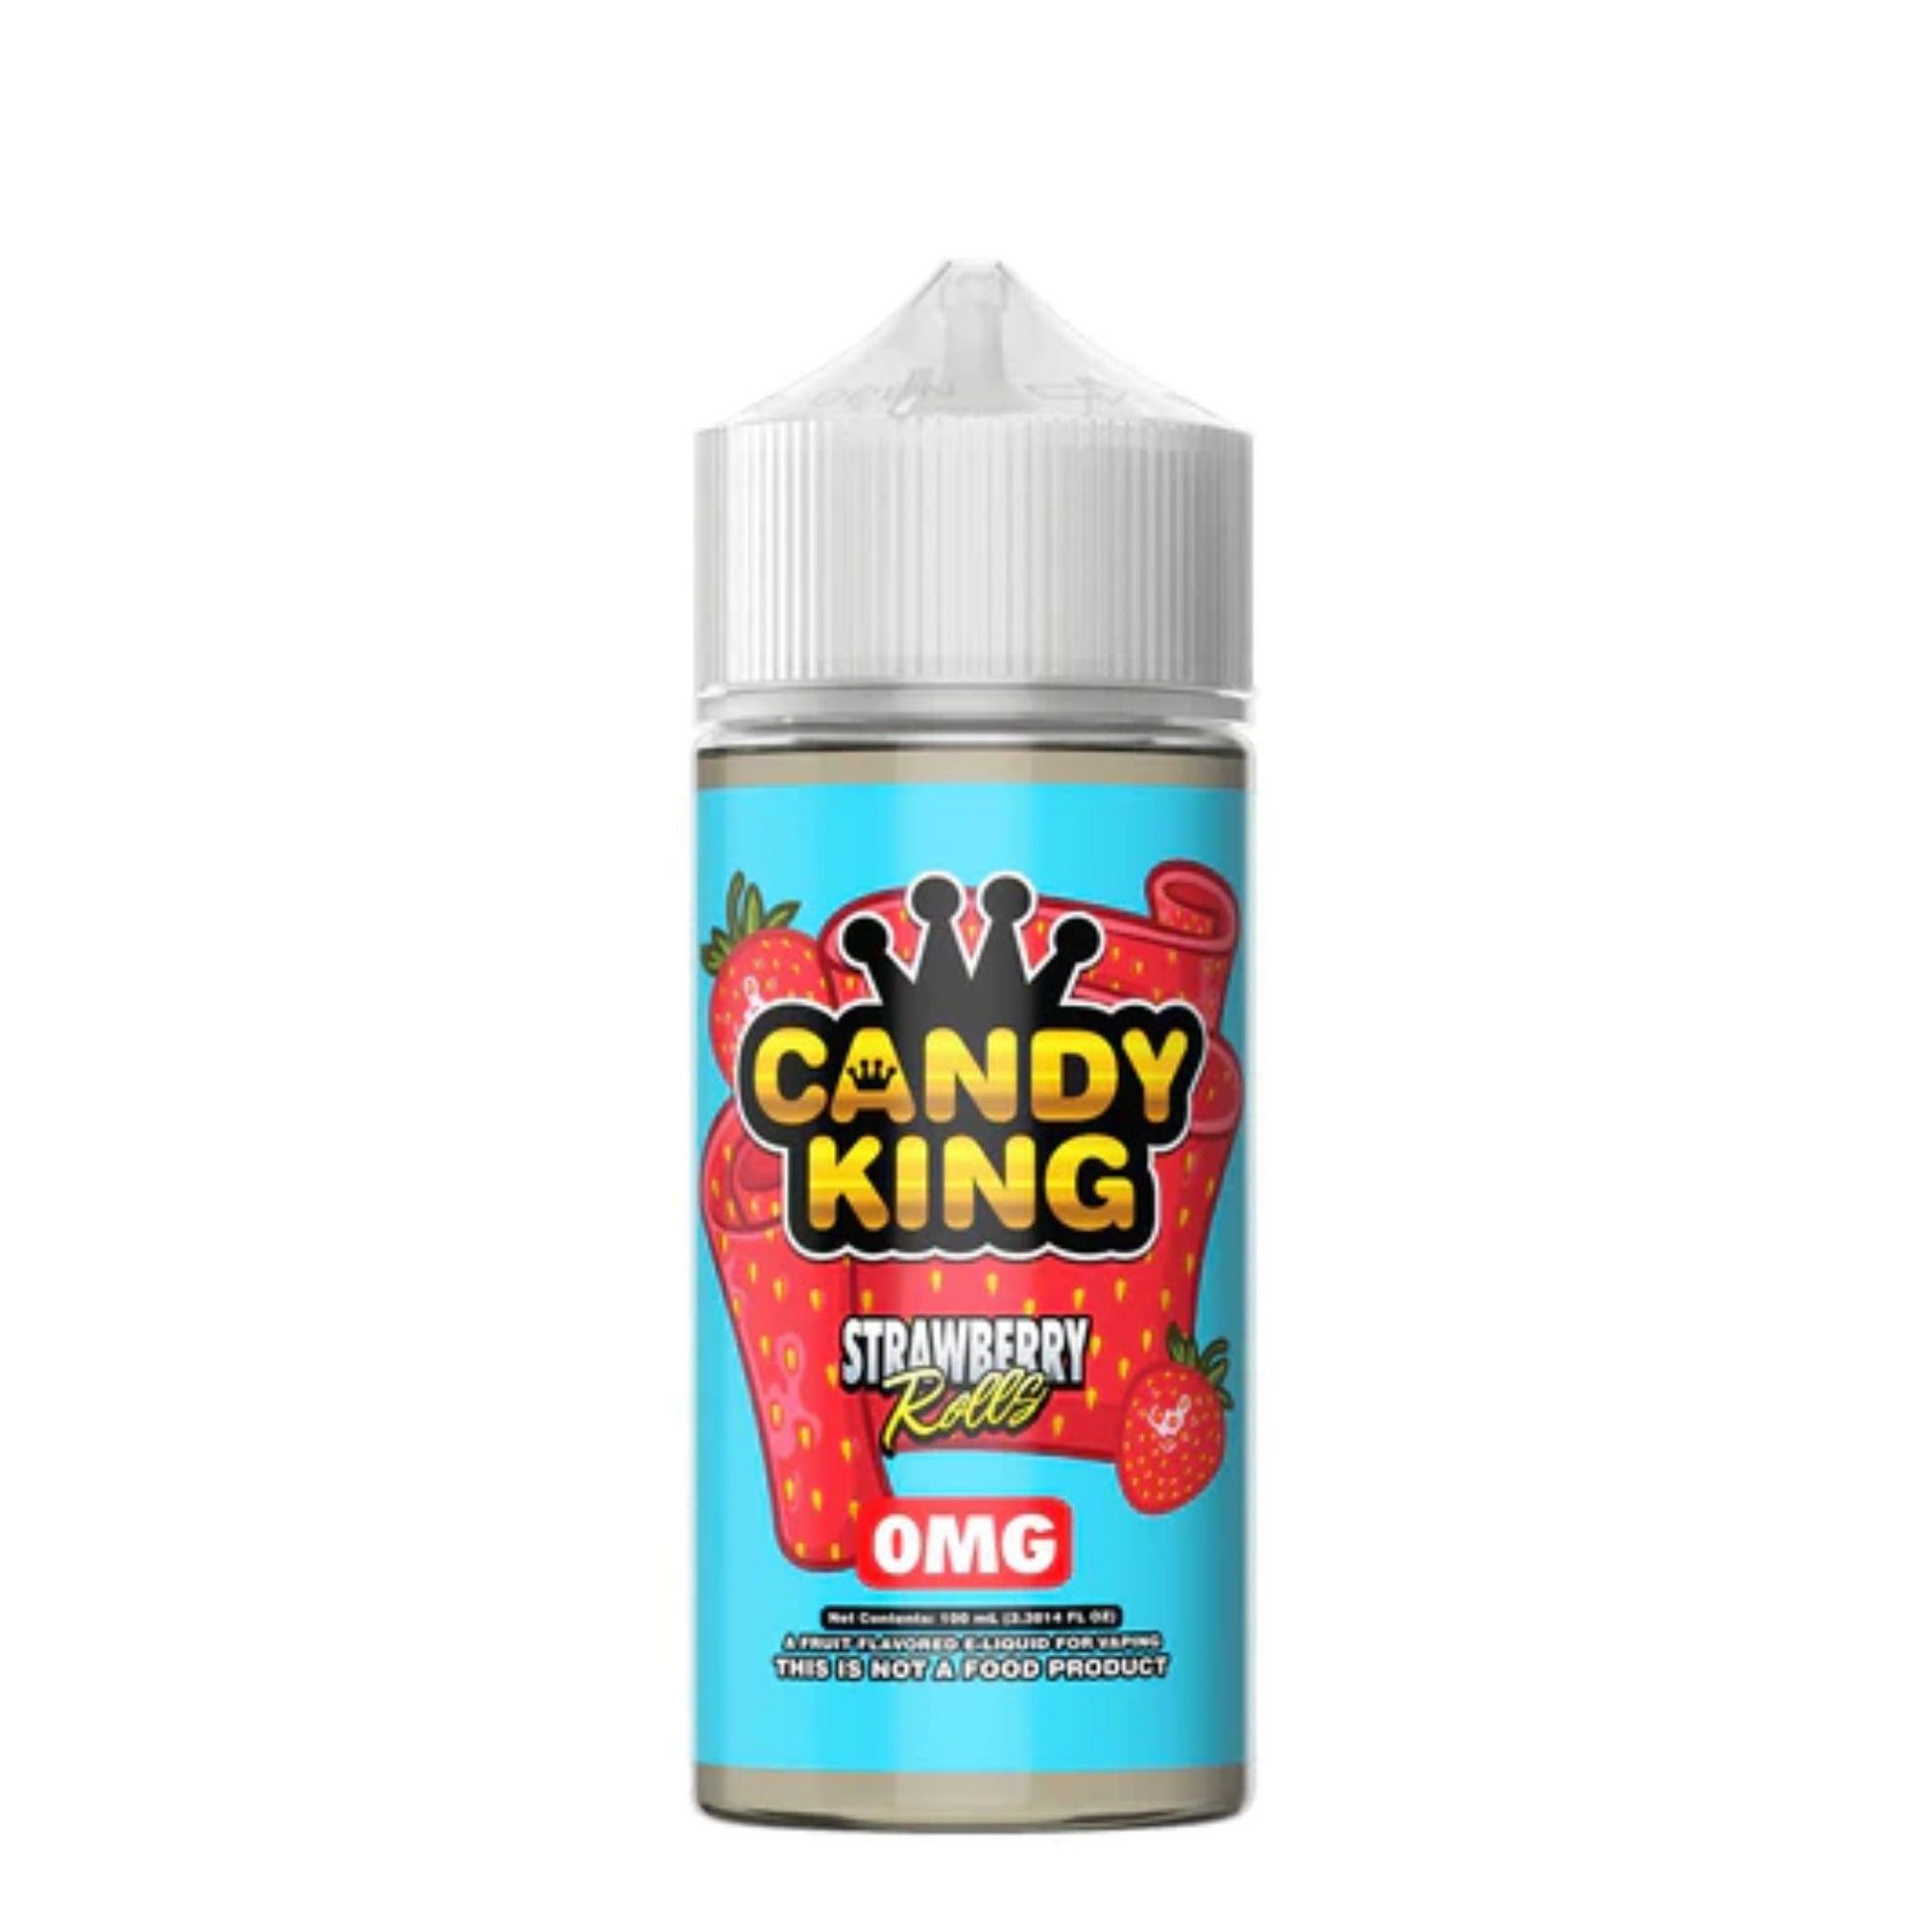 candy king strawberry rolls 100ml bottle